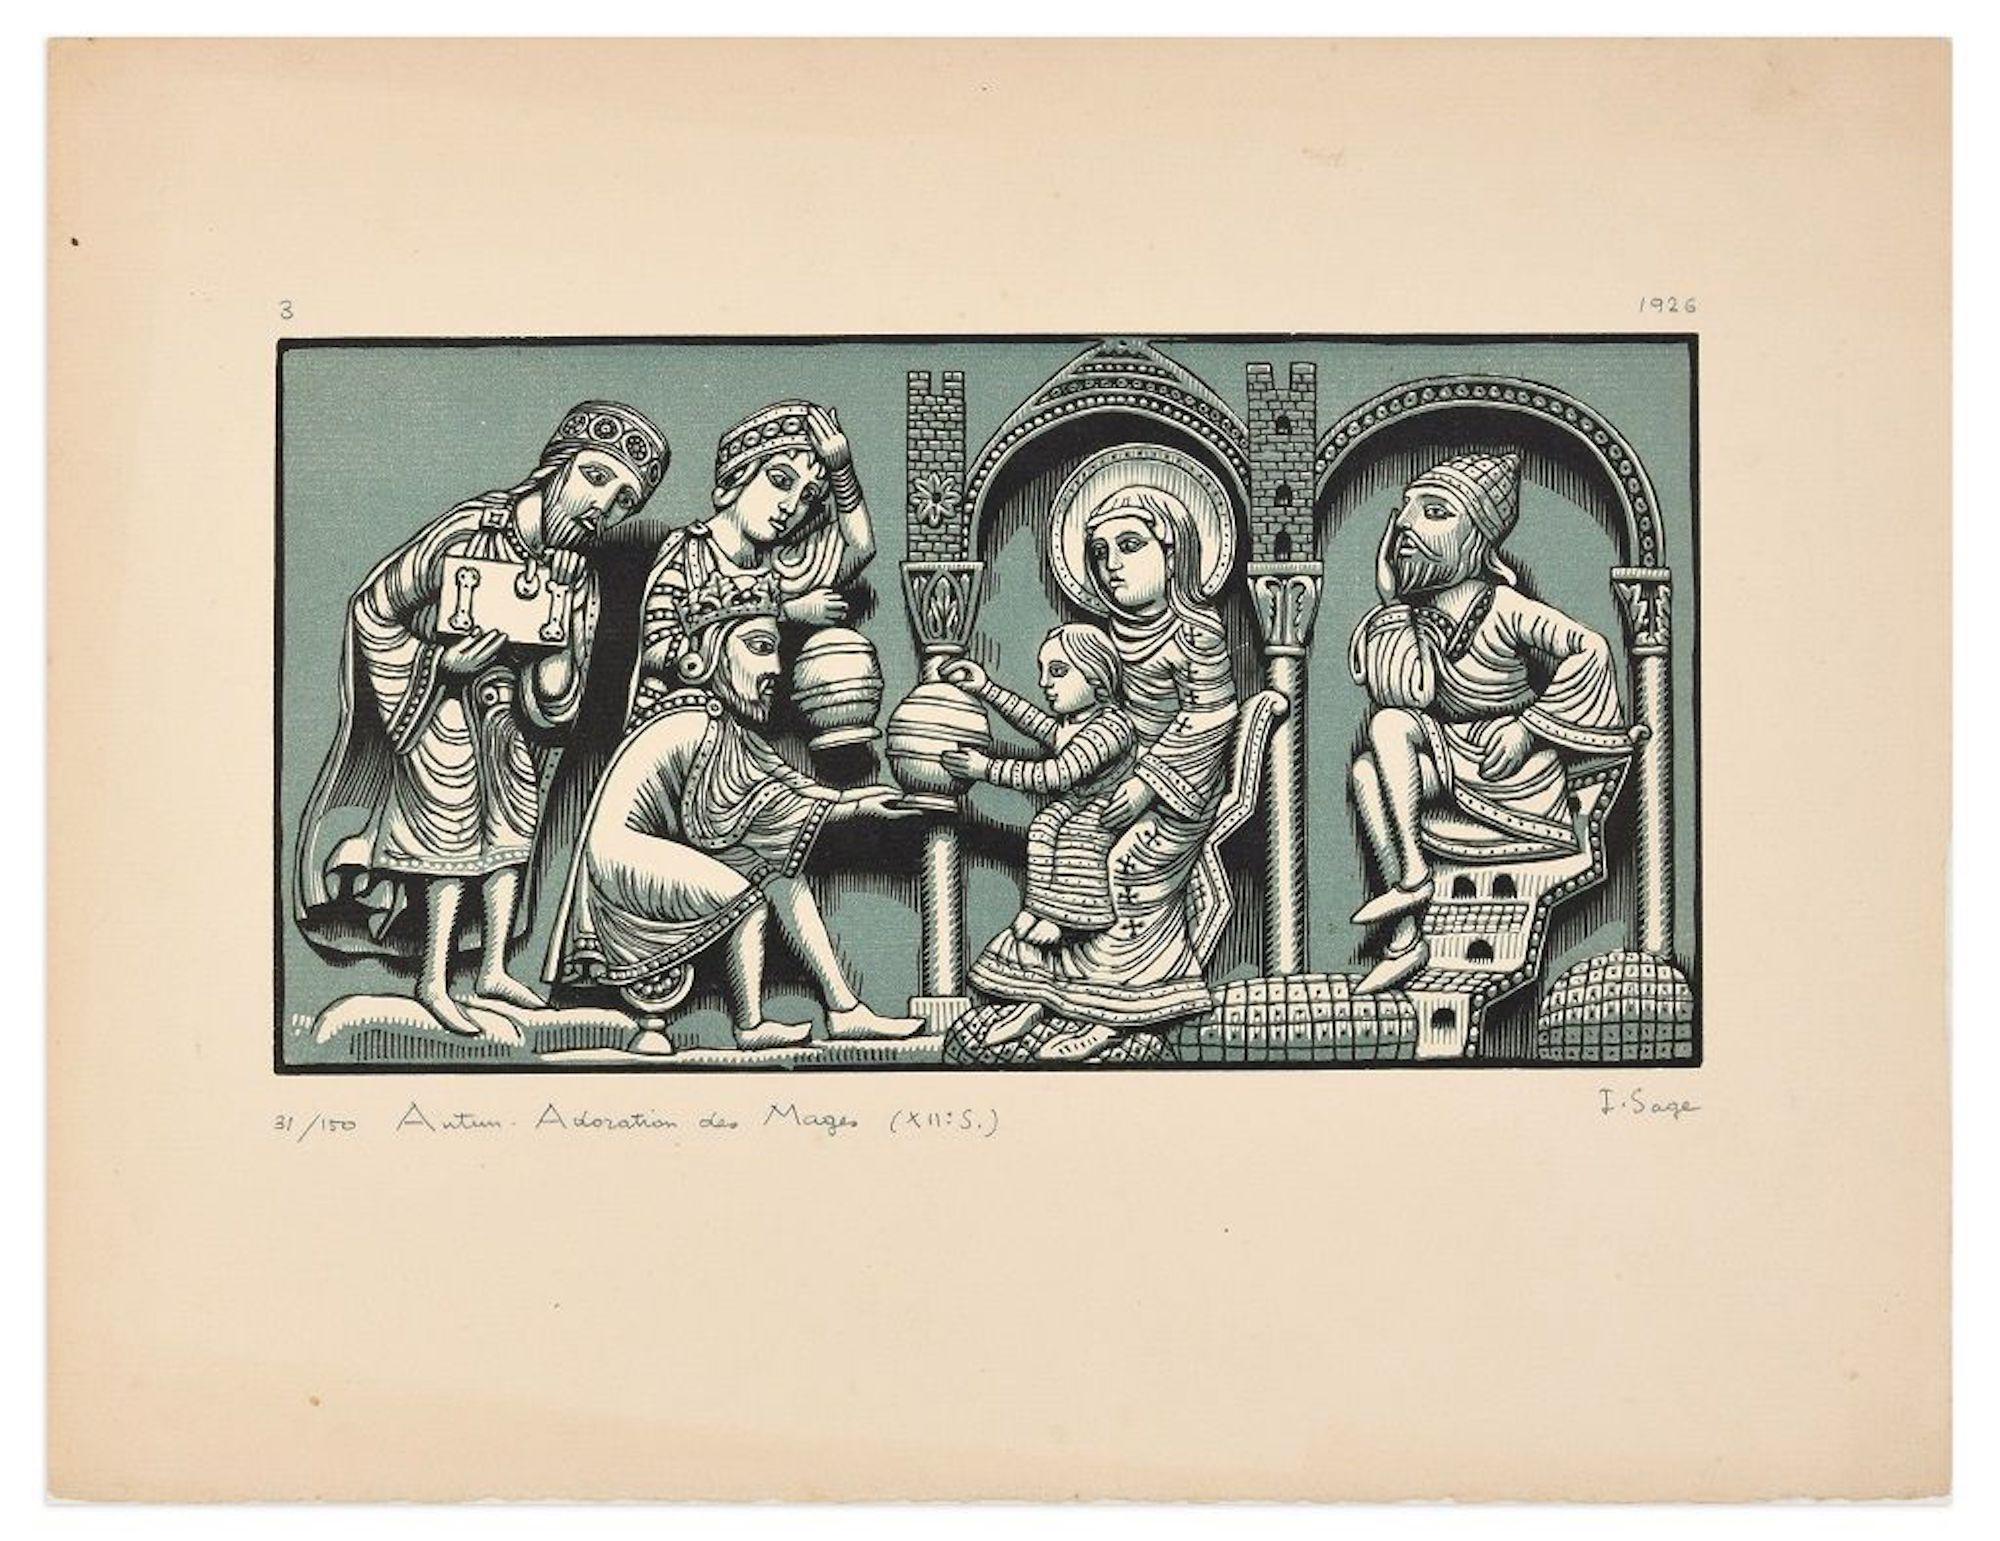 Adoration des Mages - Original Woodcut Print by I. Sage - 1926